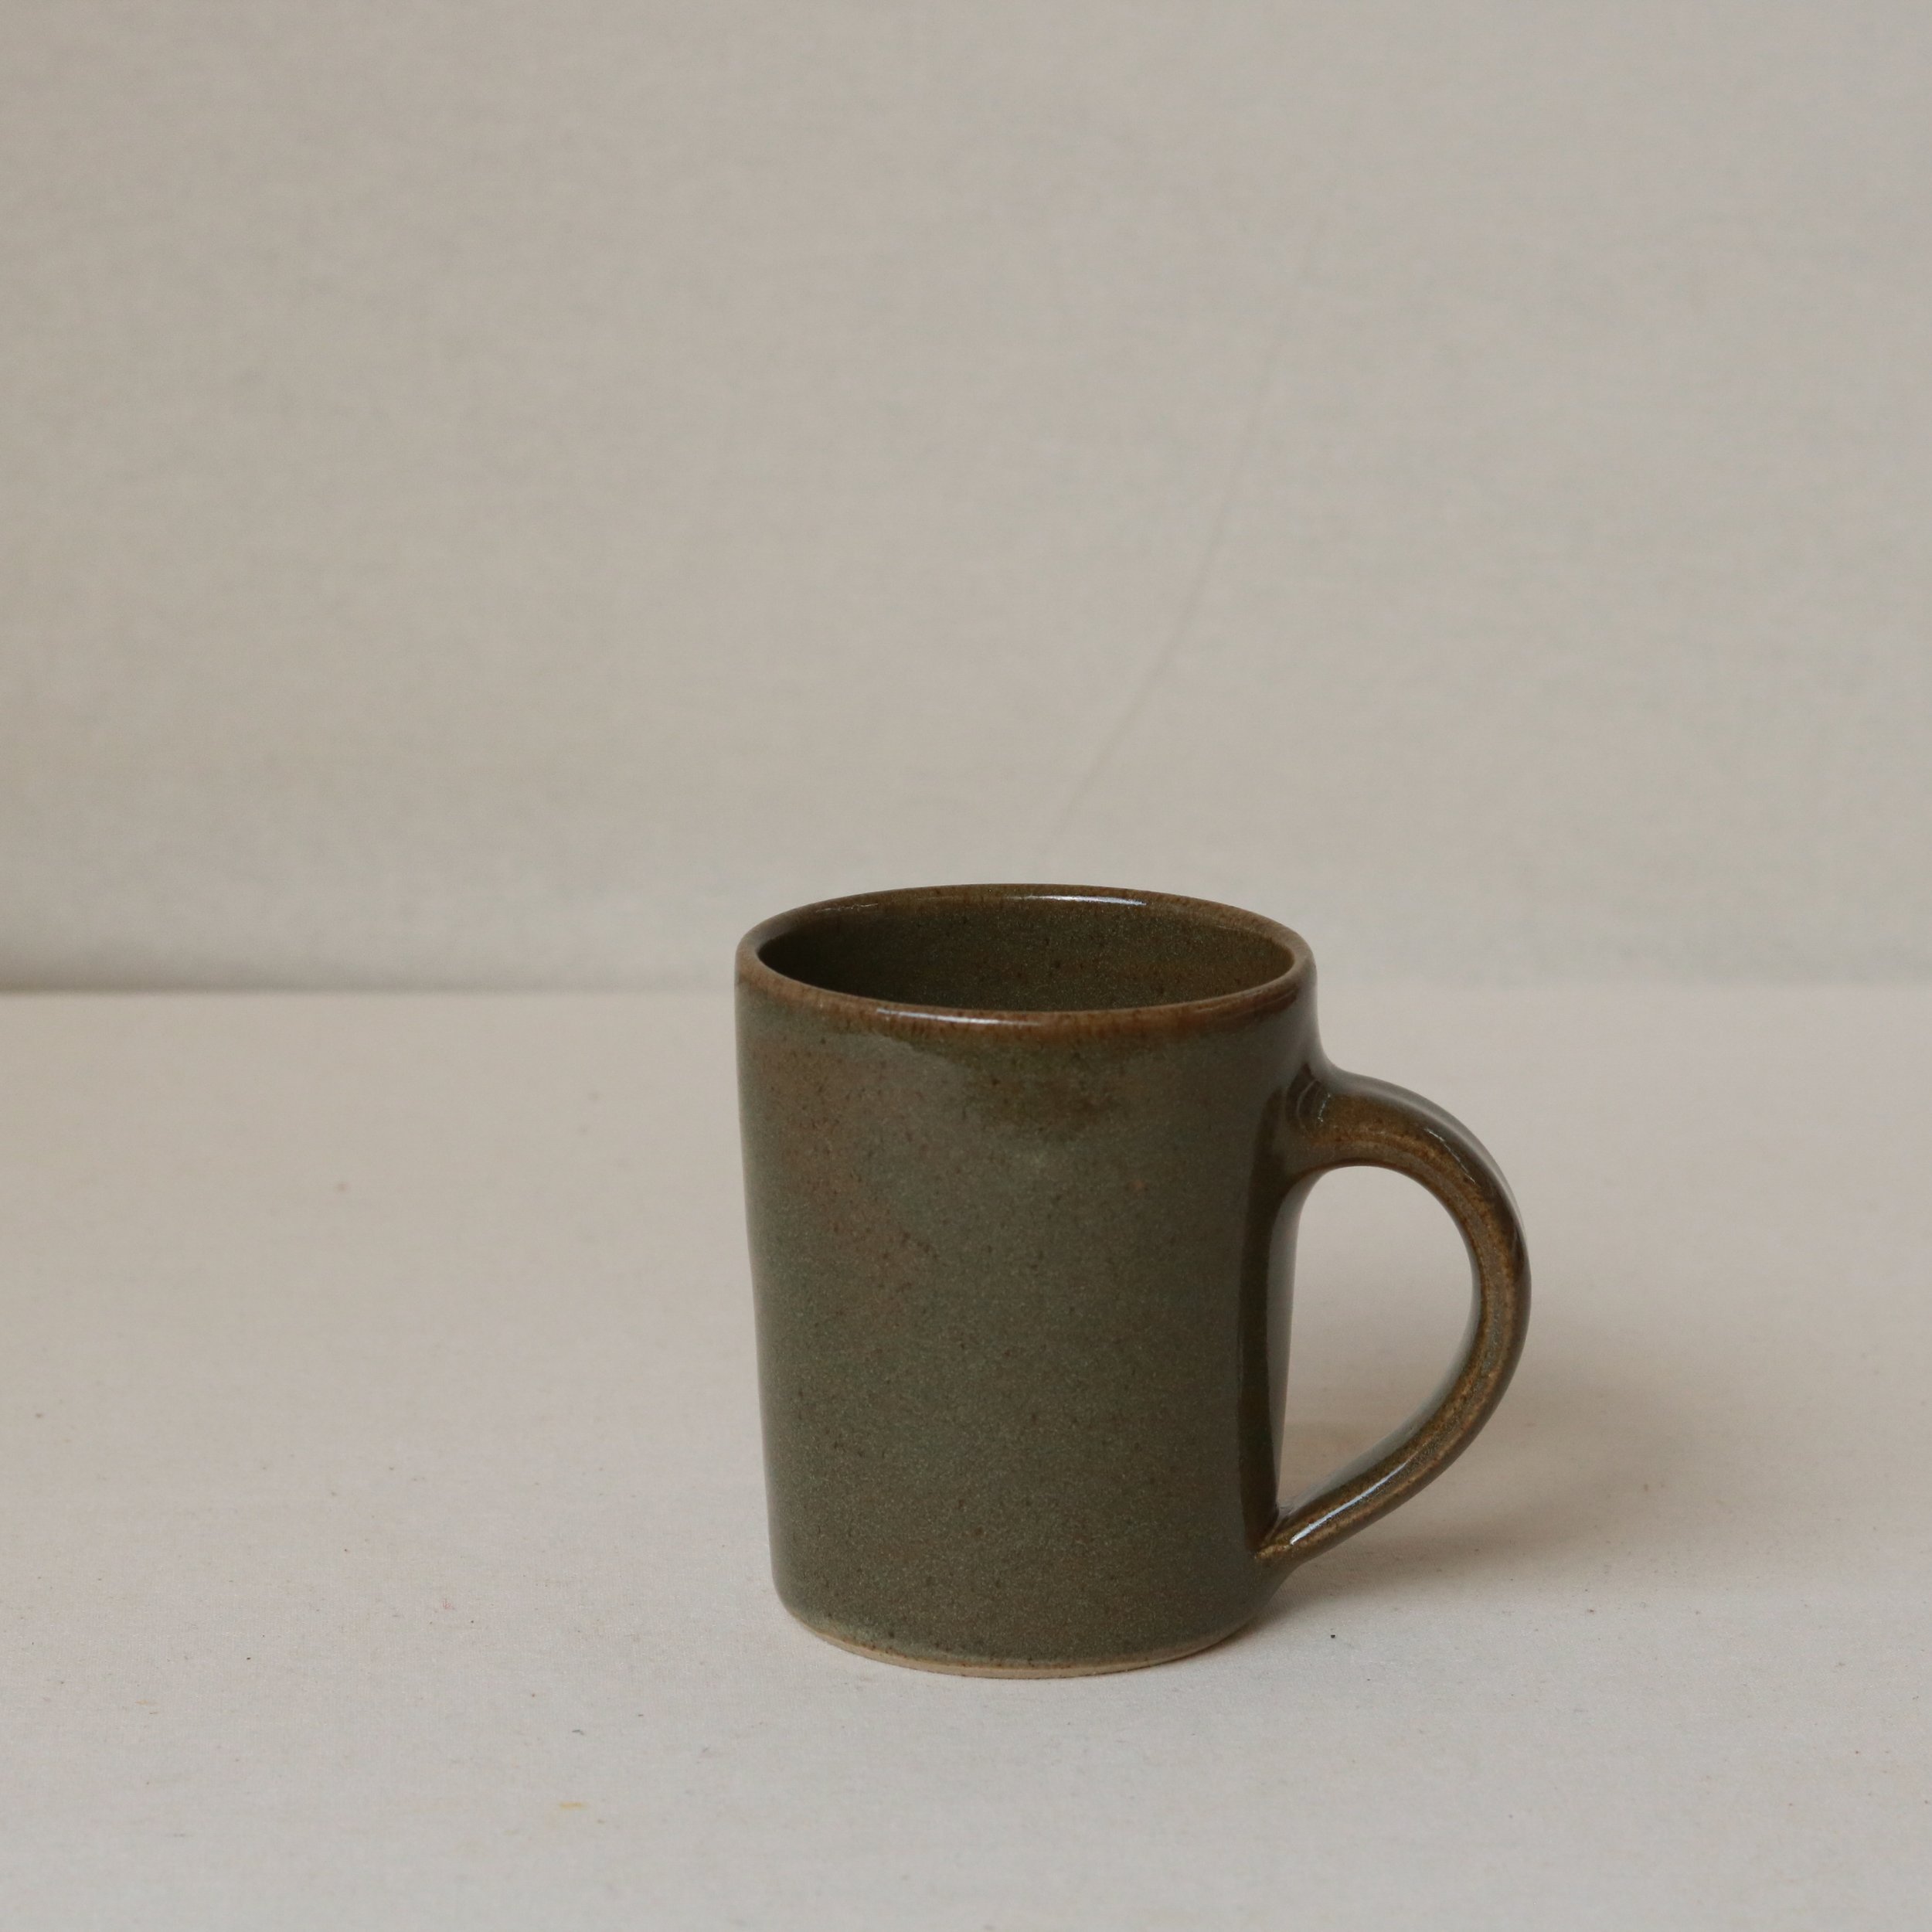 250ml Tapered Mug in Olive, Flecked Stoneware-3.jpg